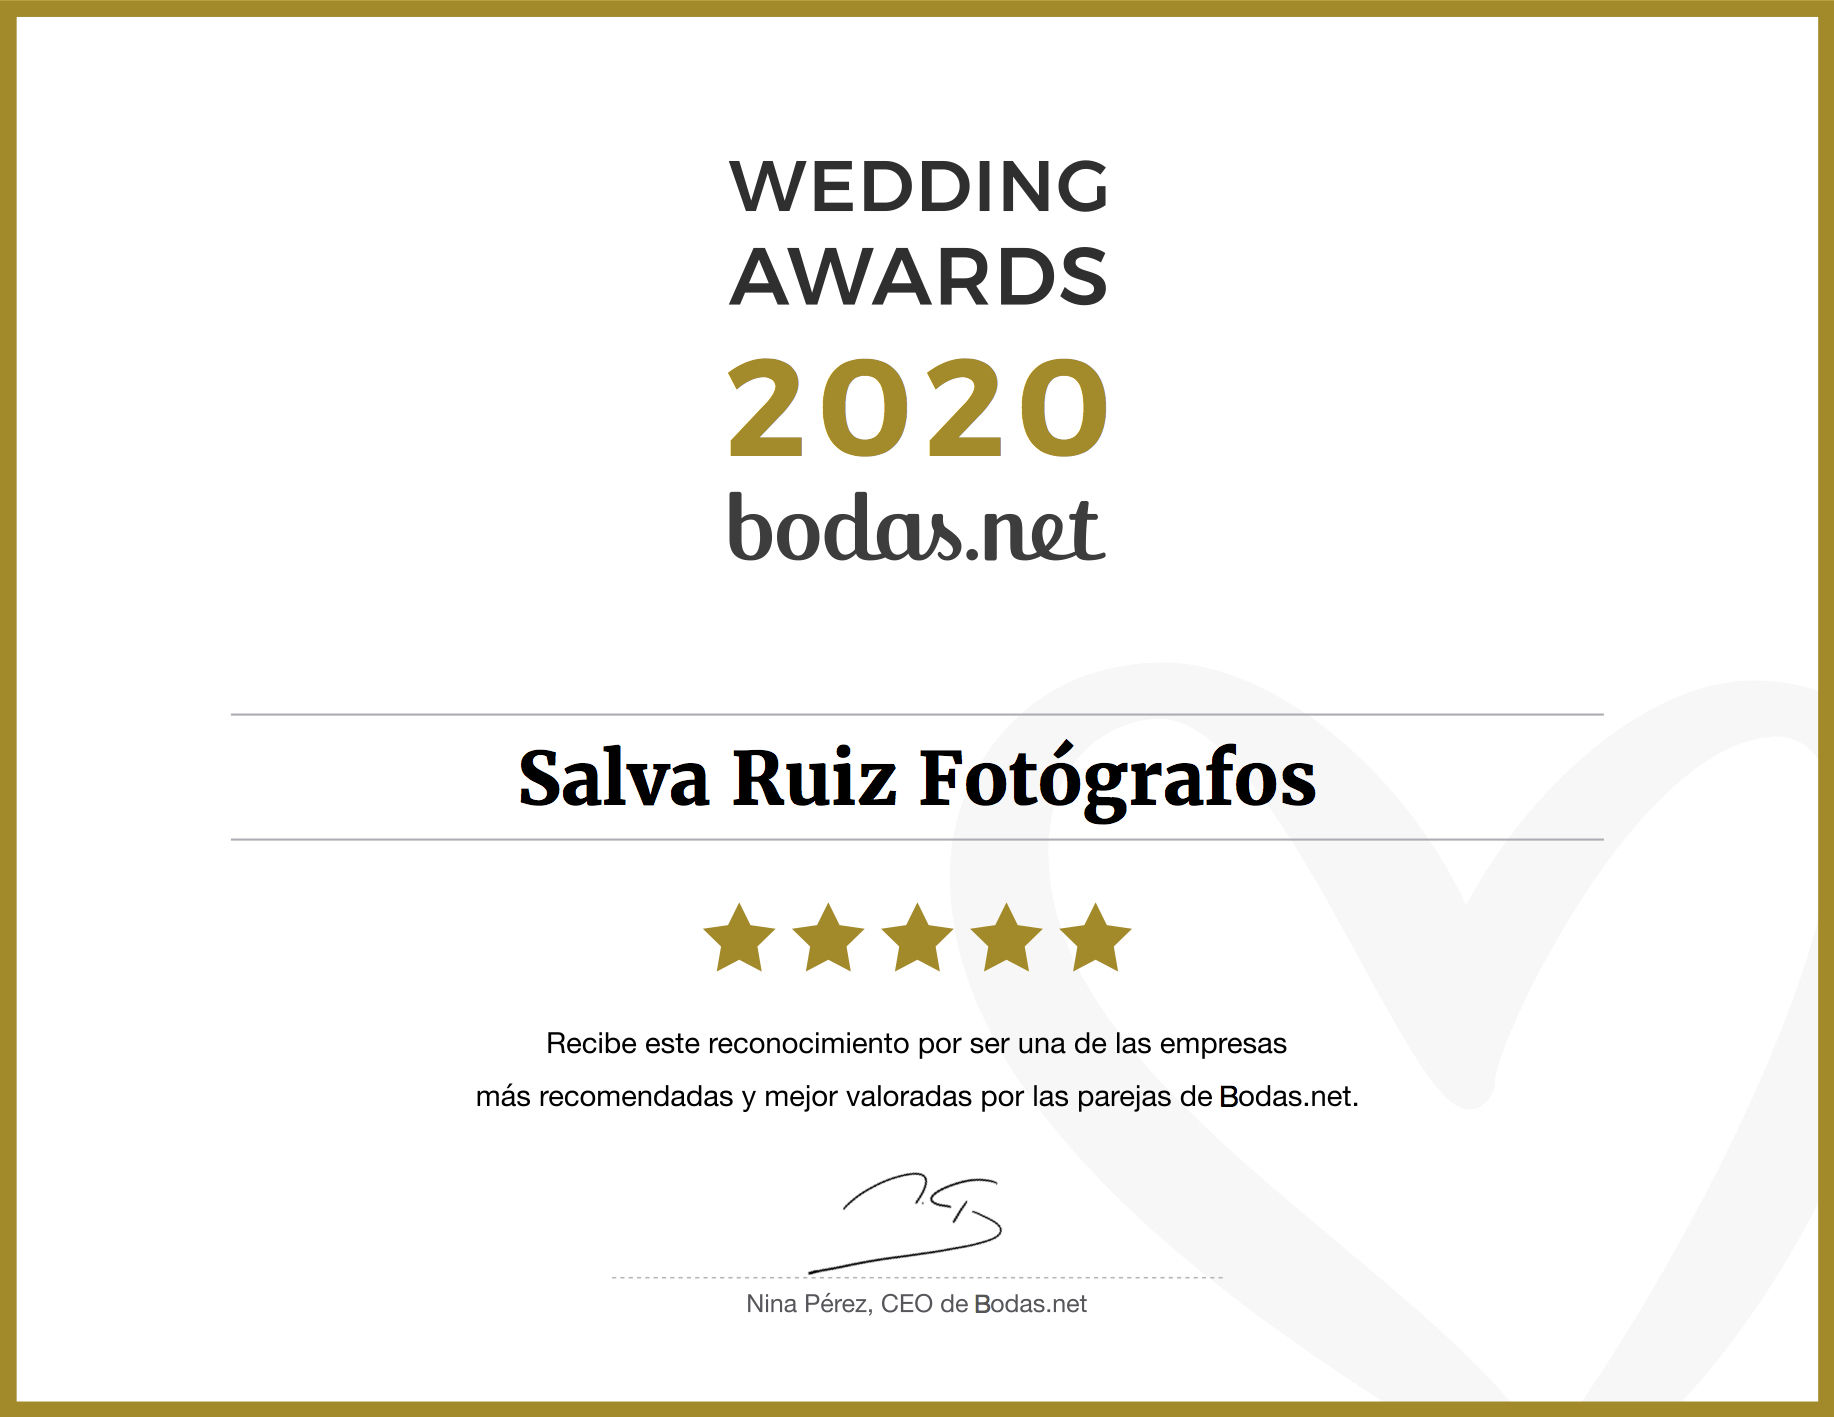 Salva Ruiz - wedding-awards-2020-2.jpg